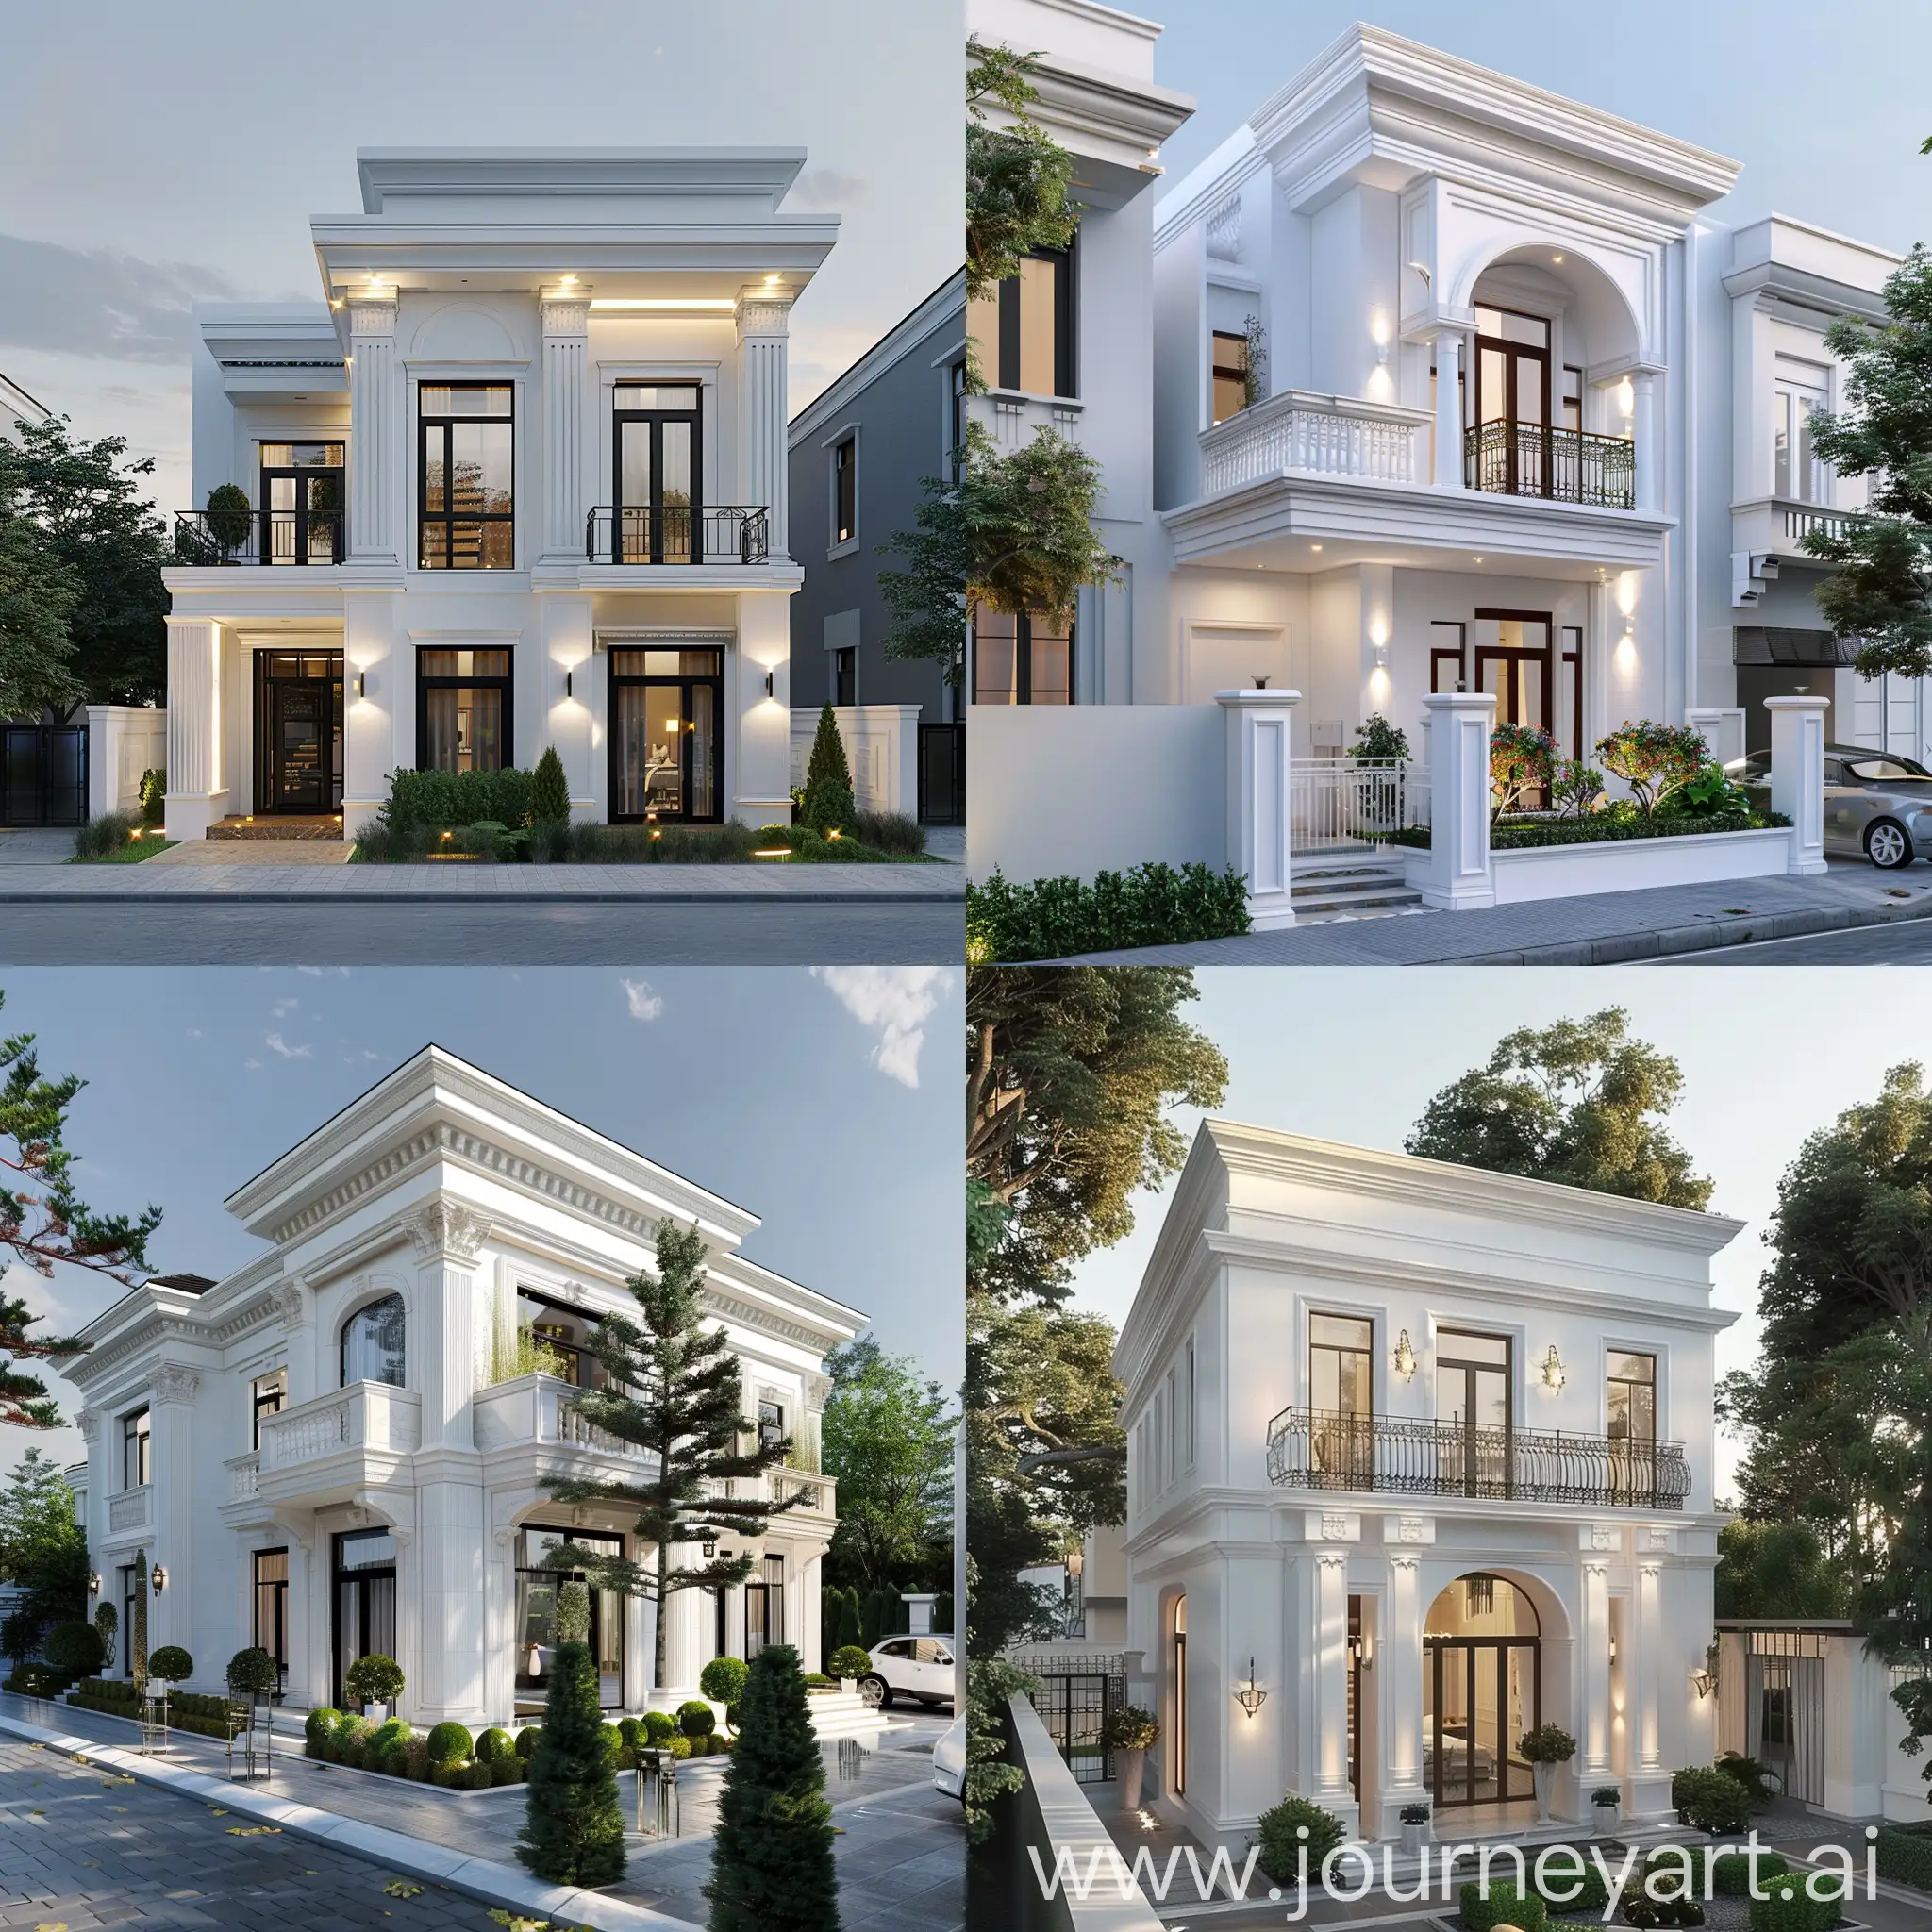 UltraRealistic-TwoStory-Modern-White-Neoclassical-House-in-Urban-Setting